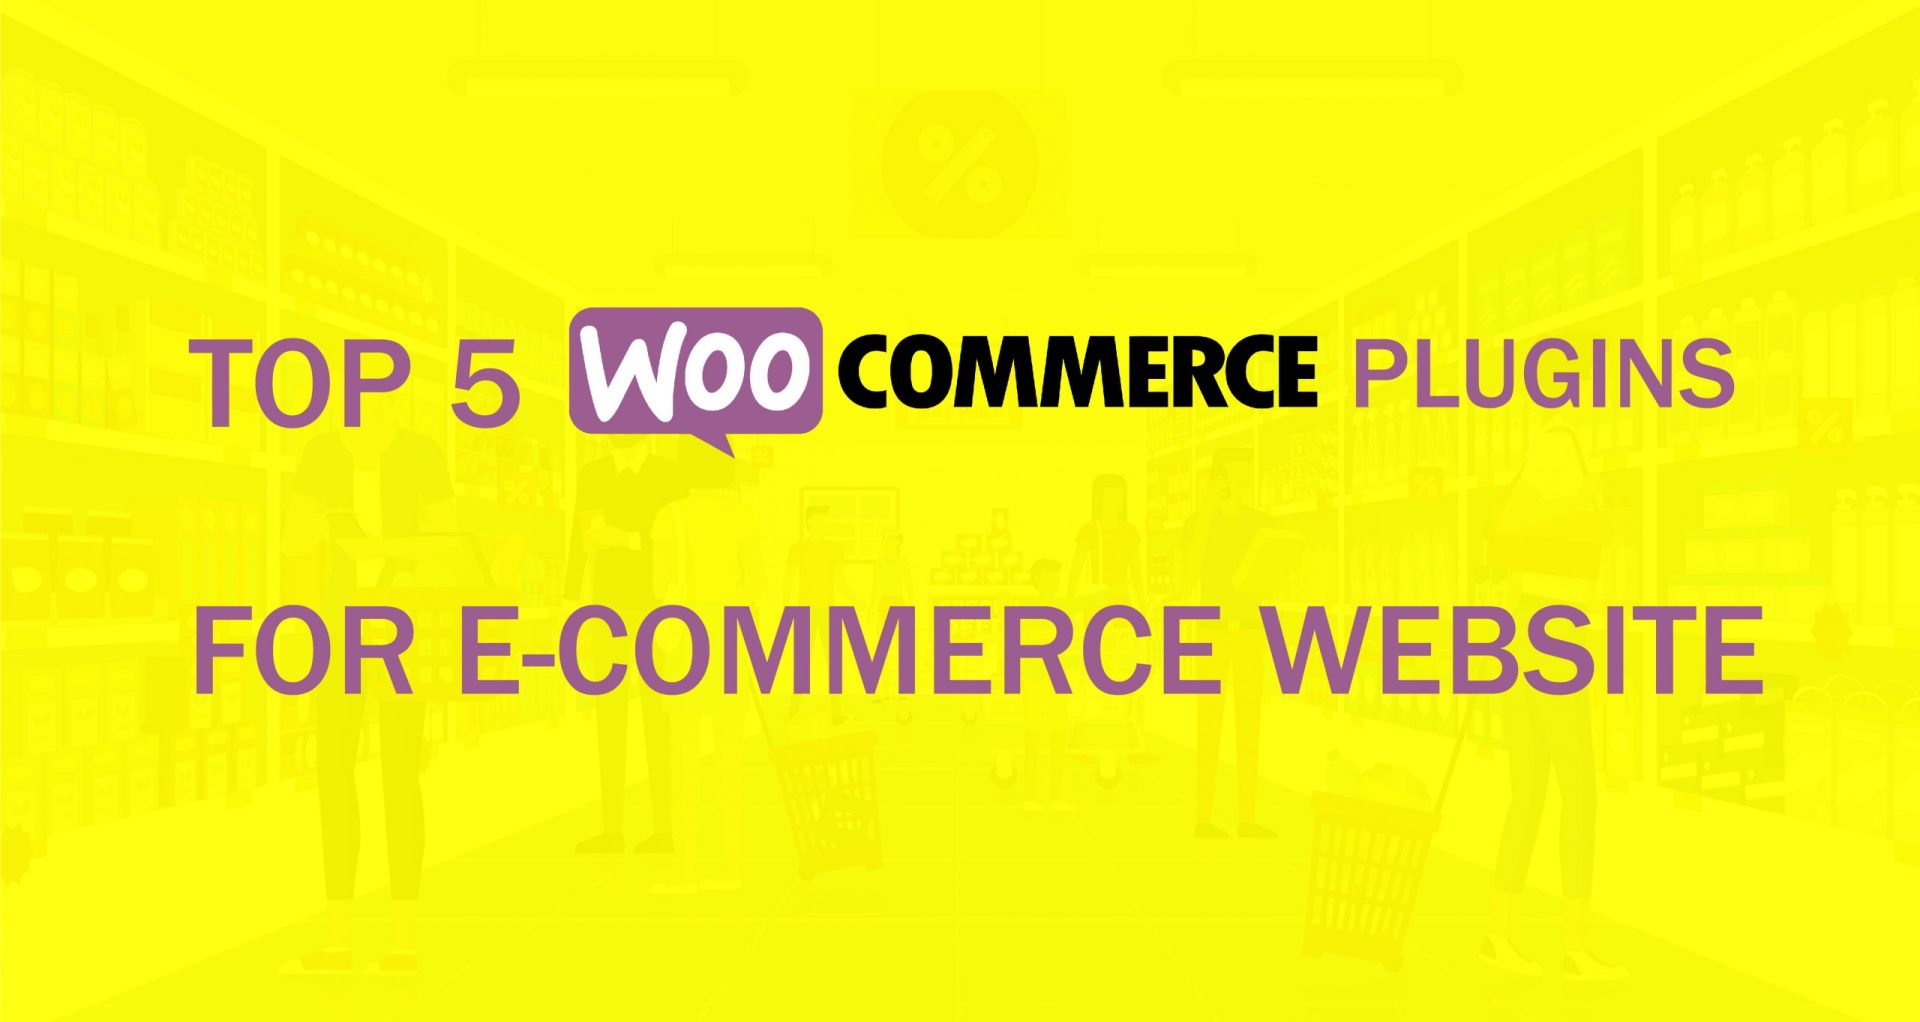 Top 5 WooCommerce Plugins for E-commerce Website